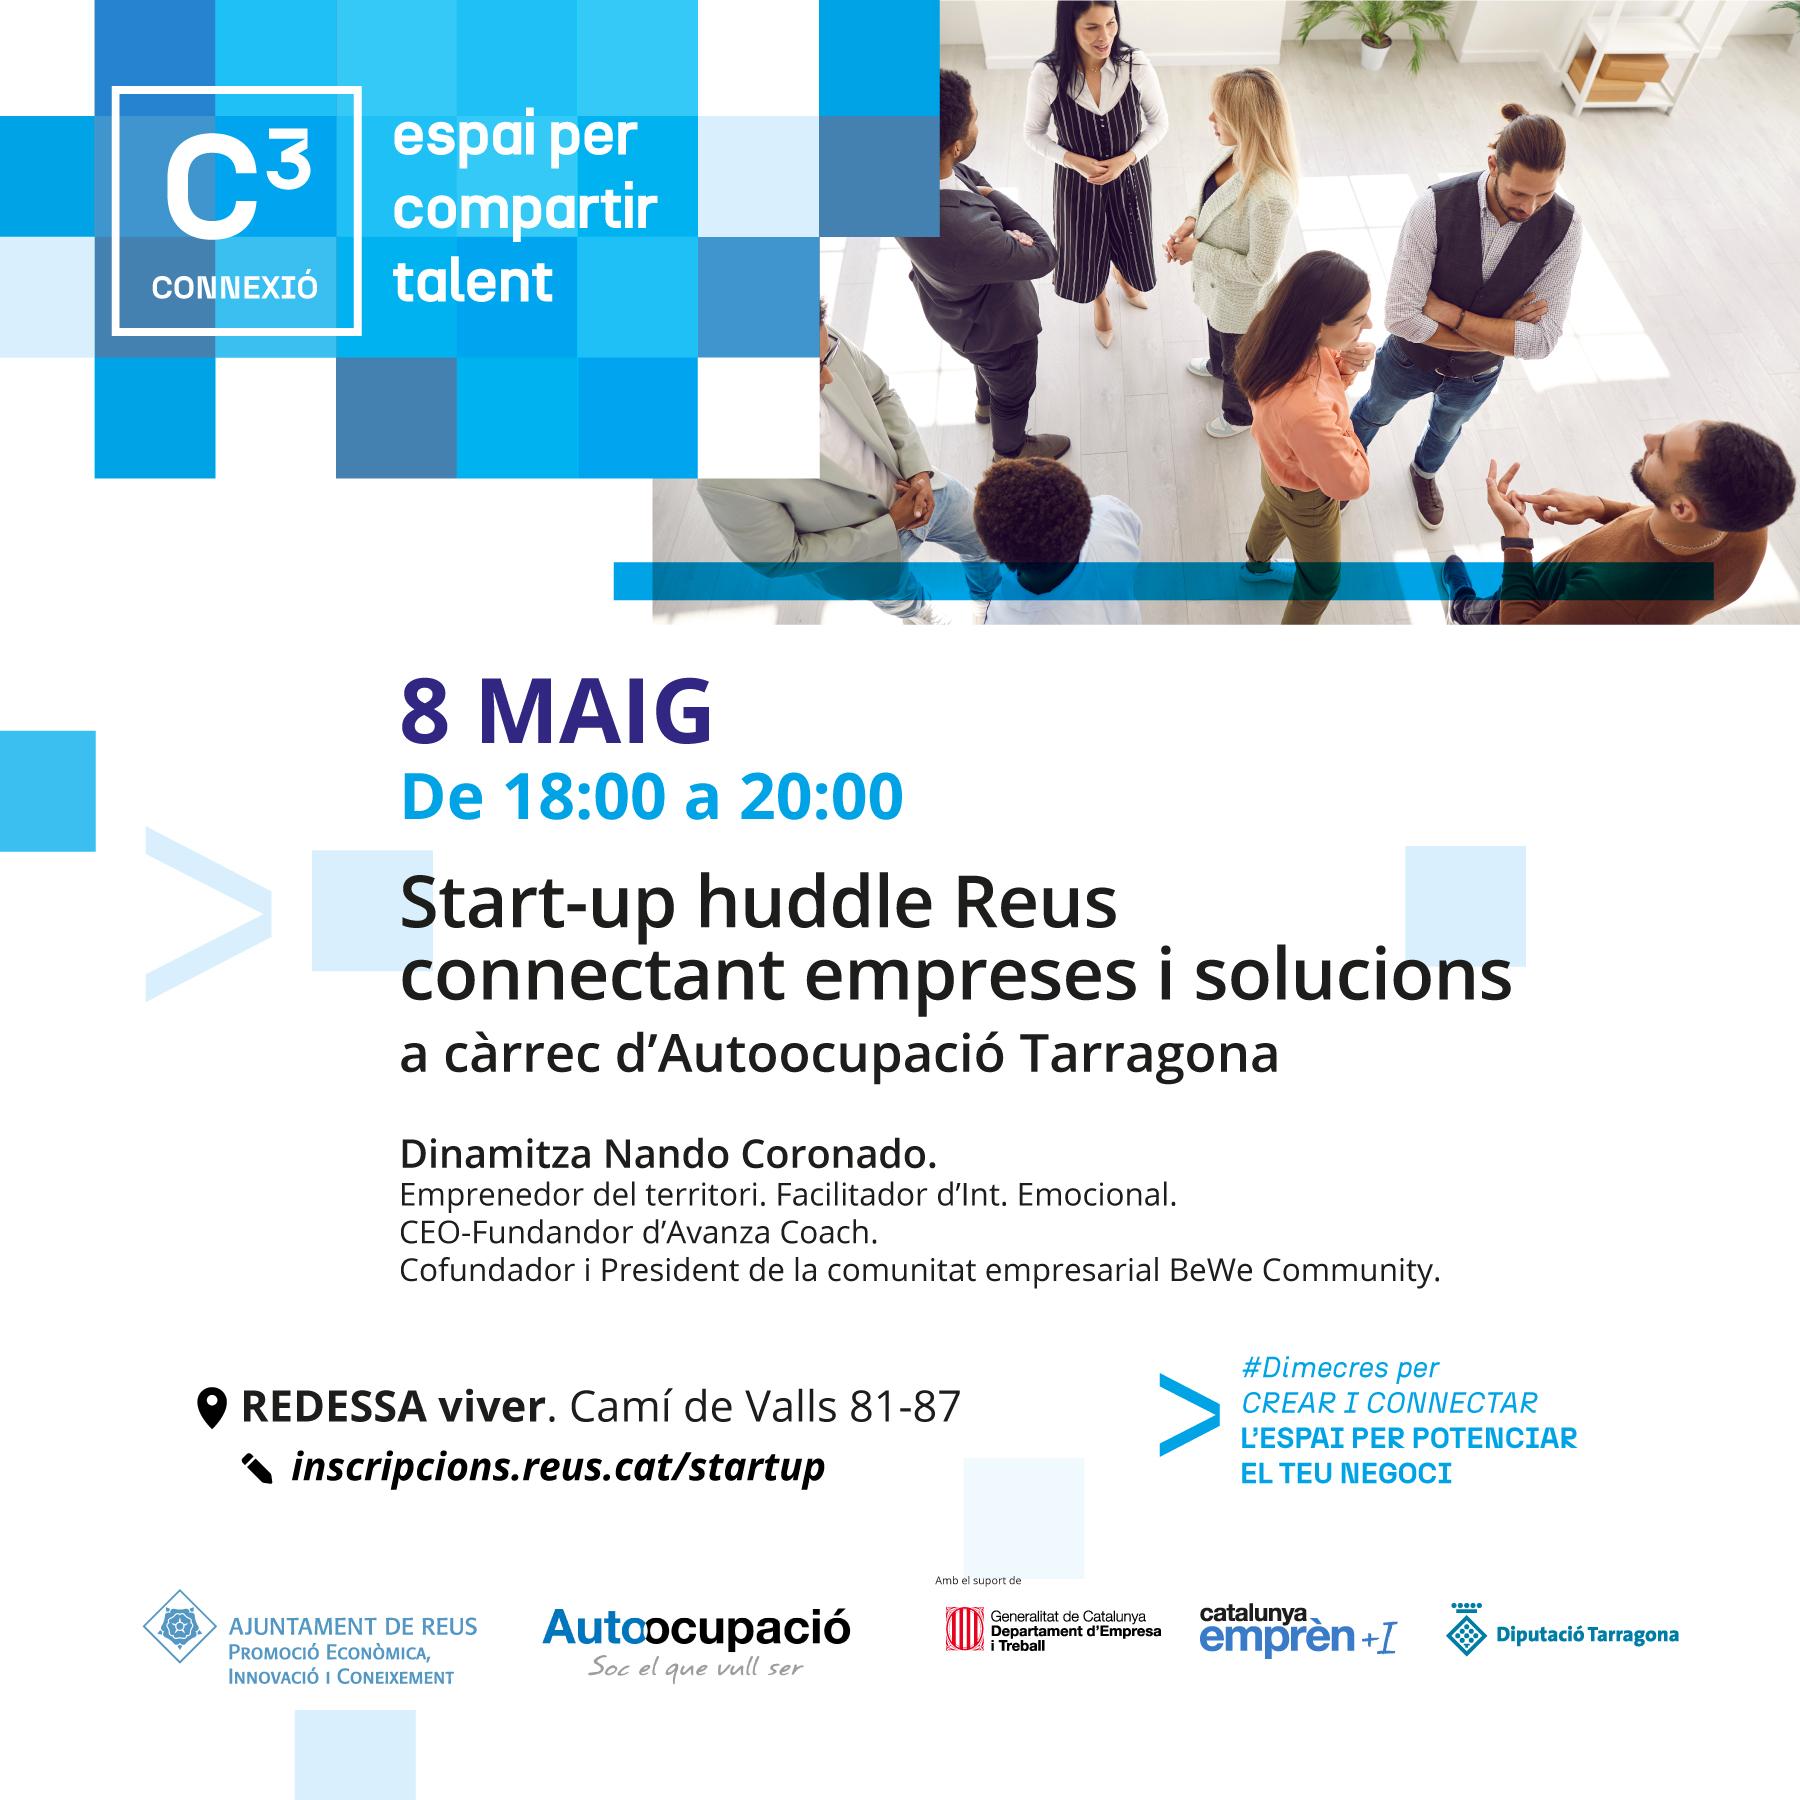 Start-up huddle Reus, connectant empreses i solucions